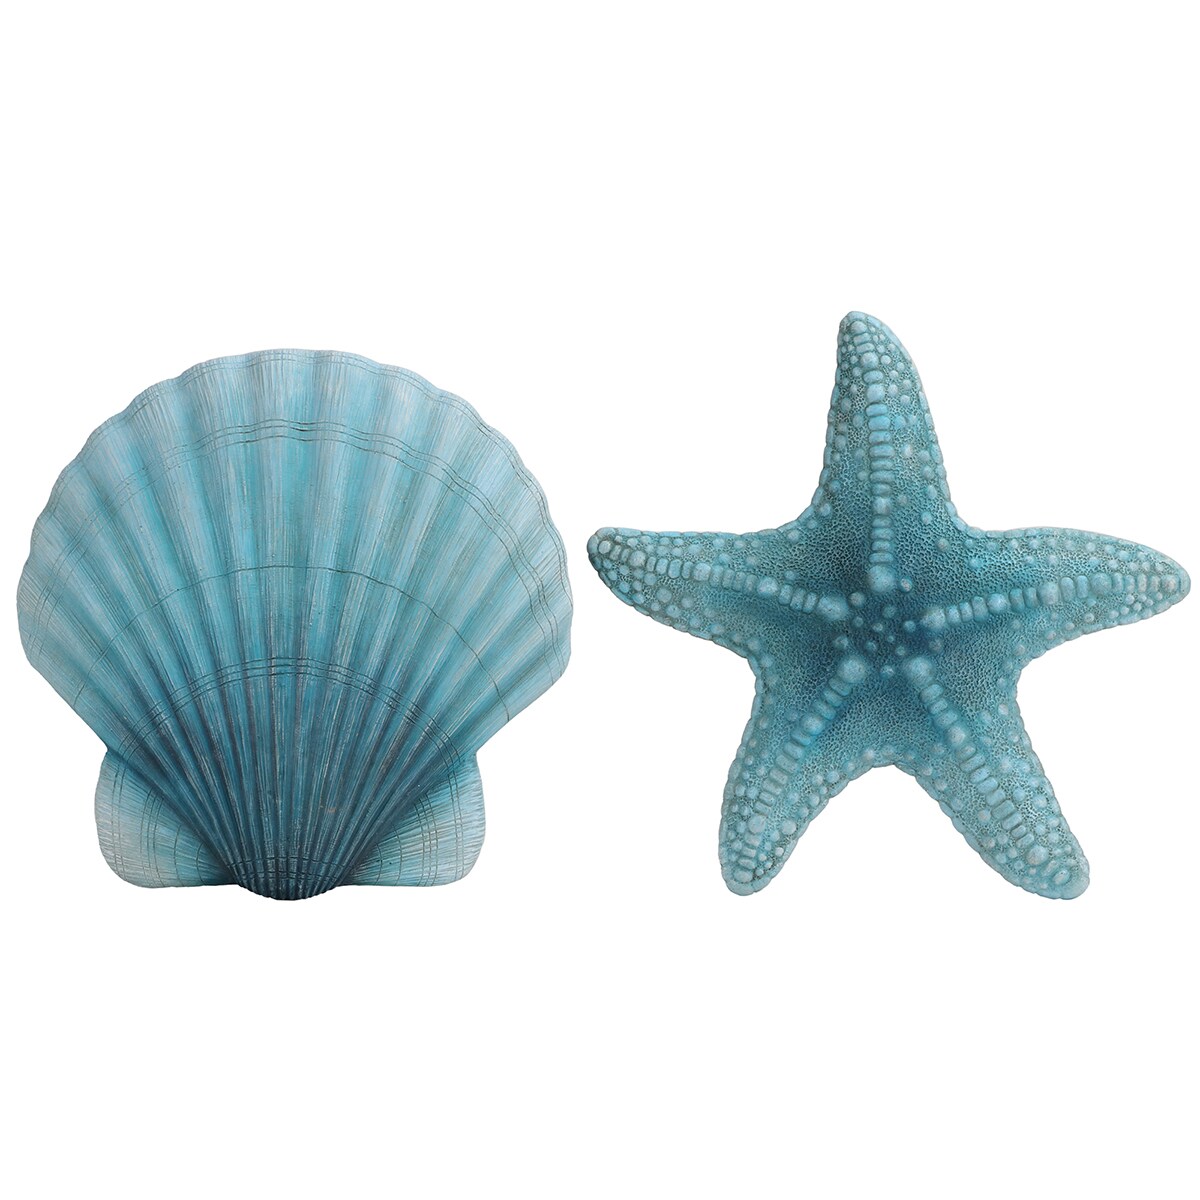 Set of 3 Sea Shells & Starfish Metal Art